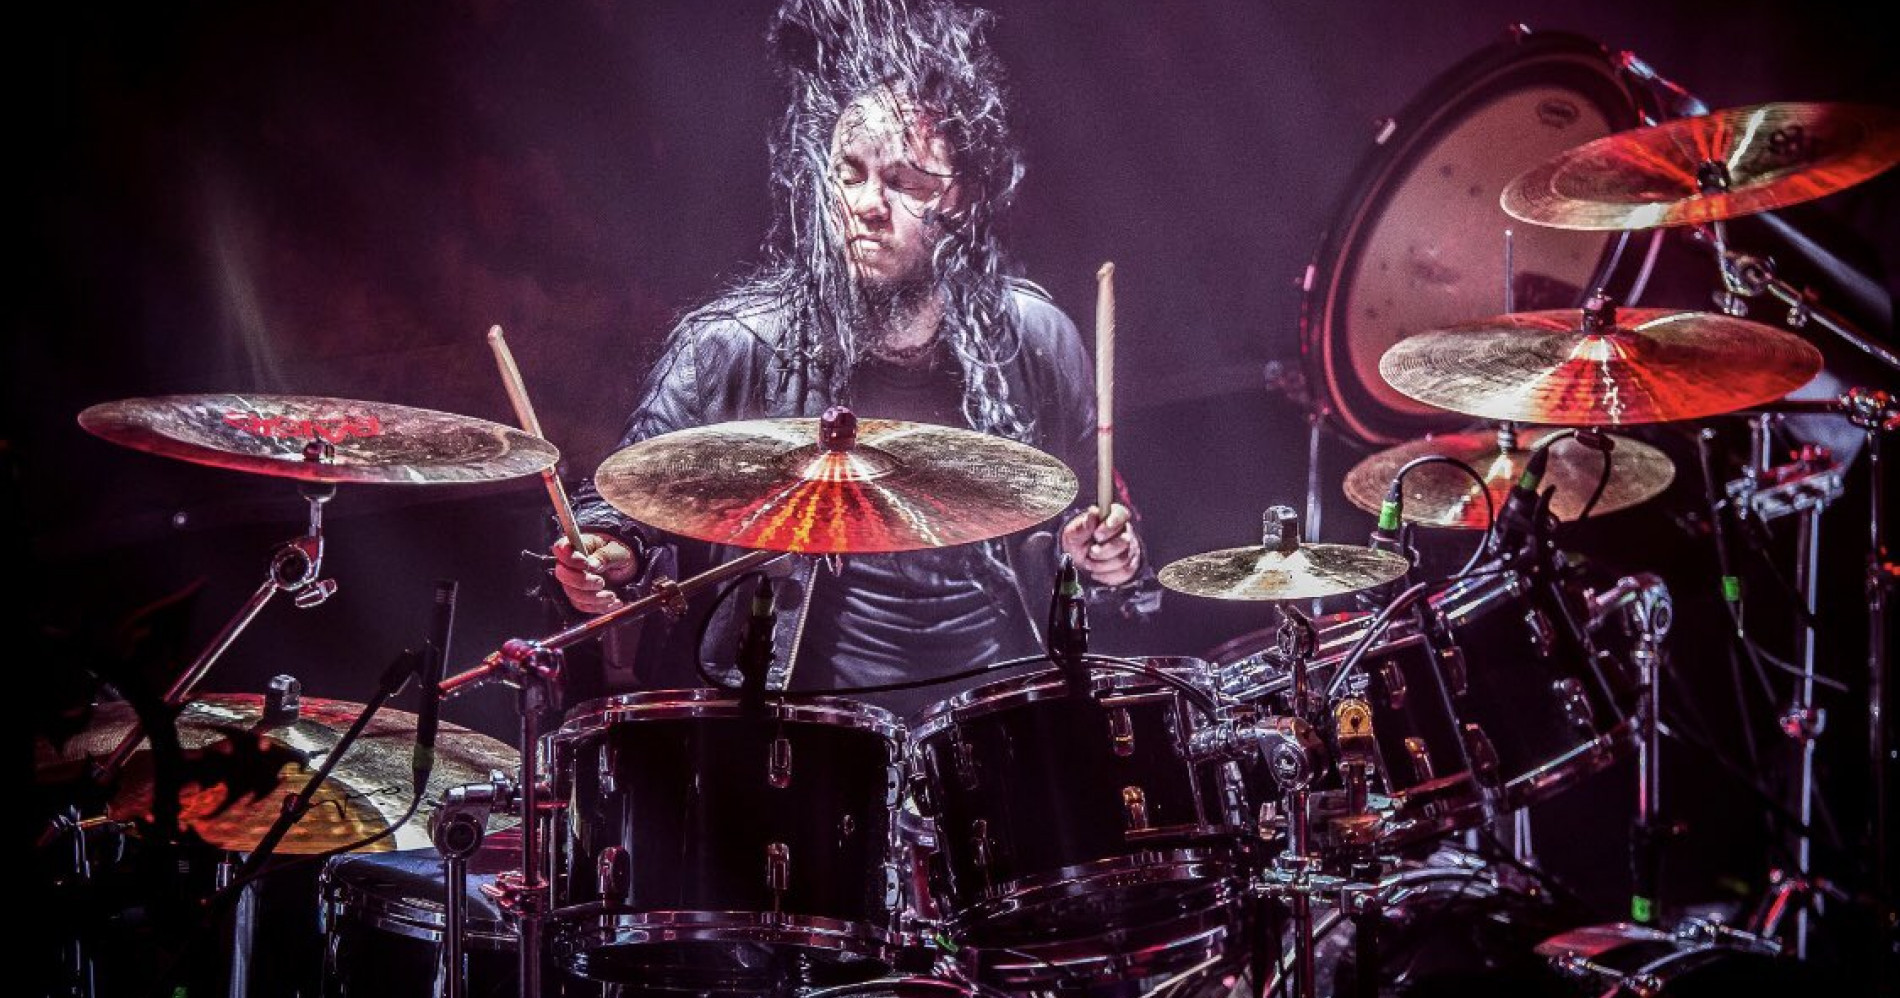 Joey Jordison Drumer Eks Slipknot Meninggal, Foto Hitam Menghiasi Medsos